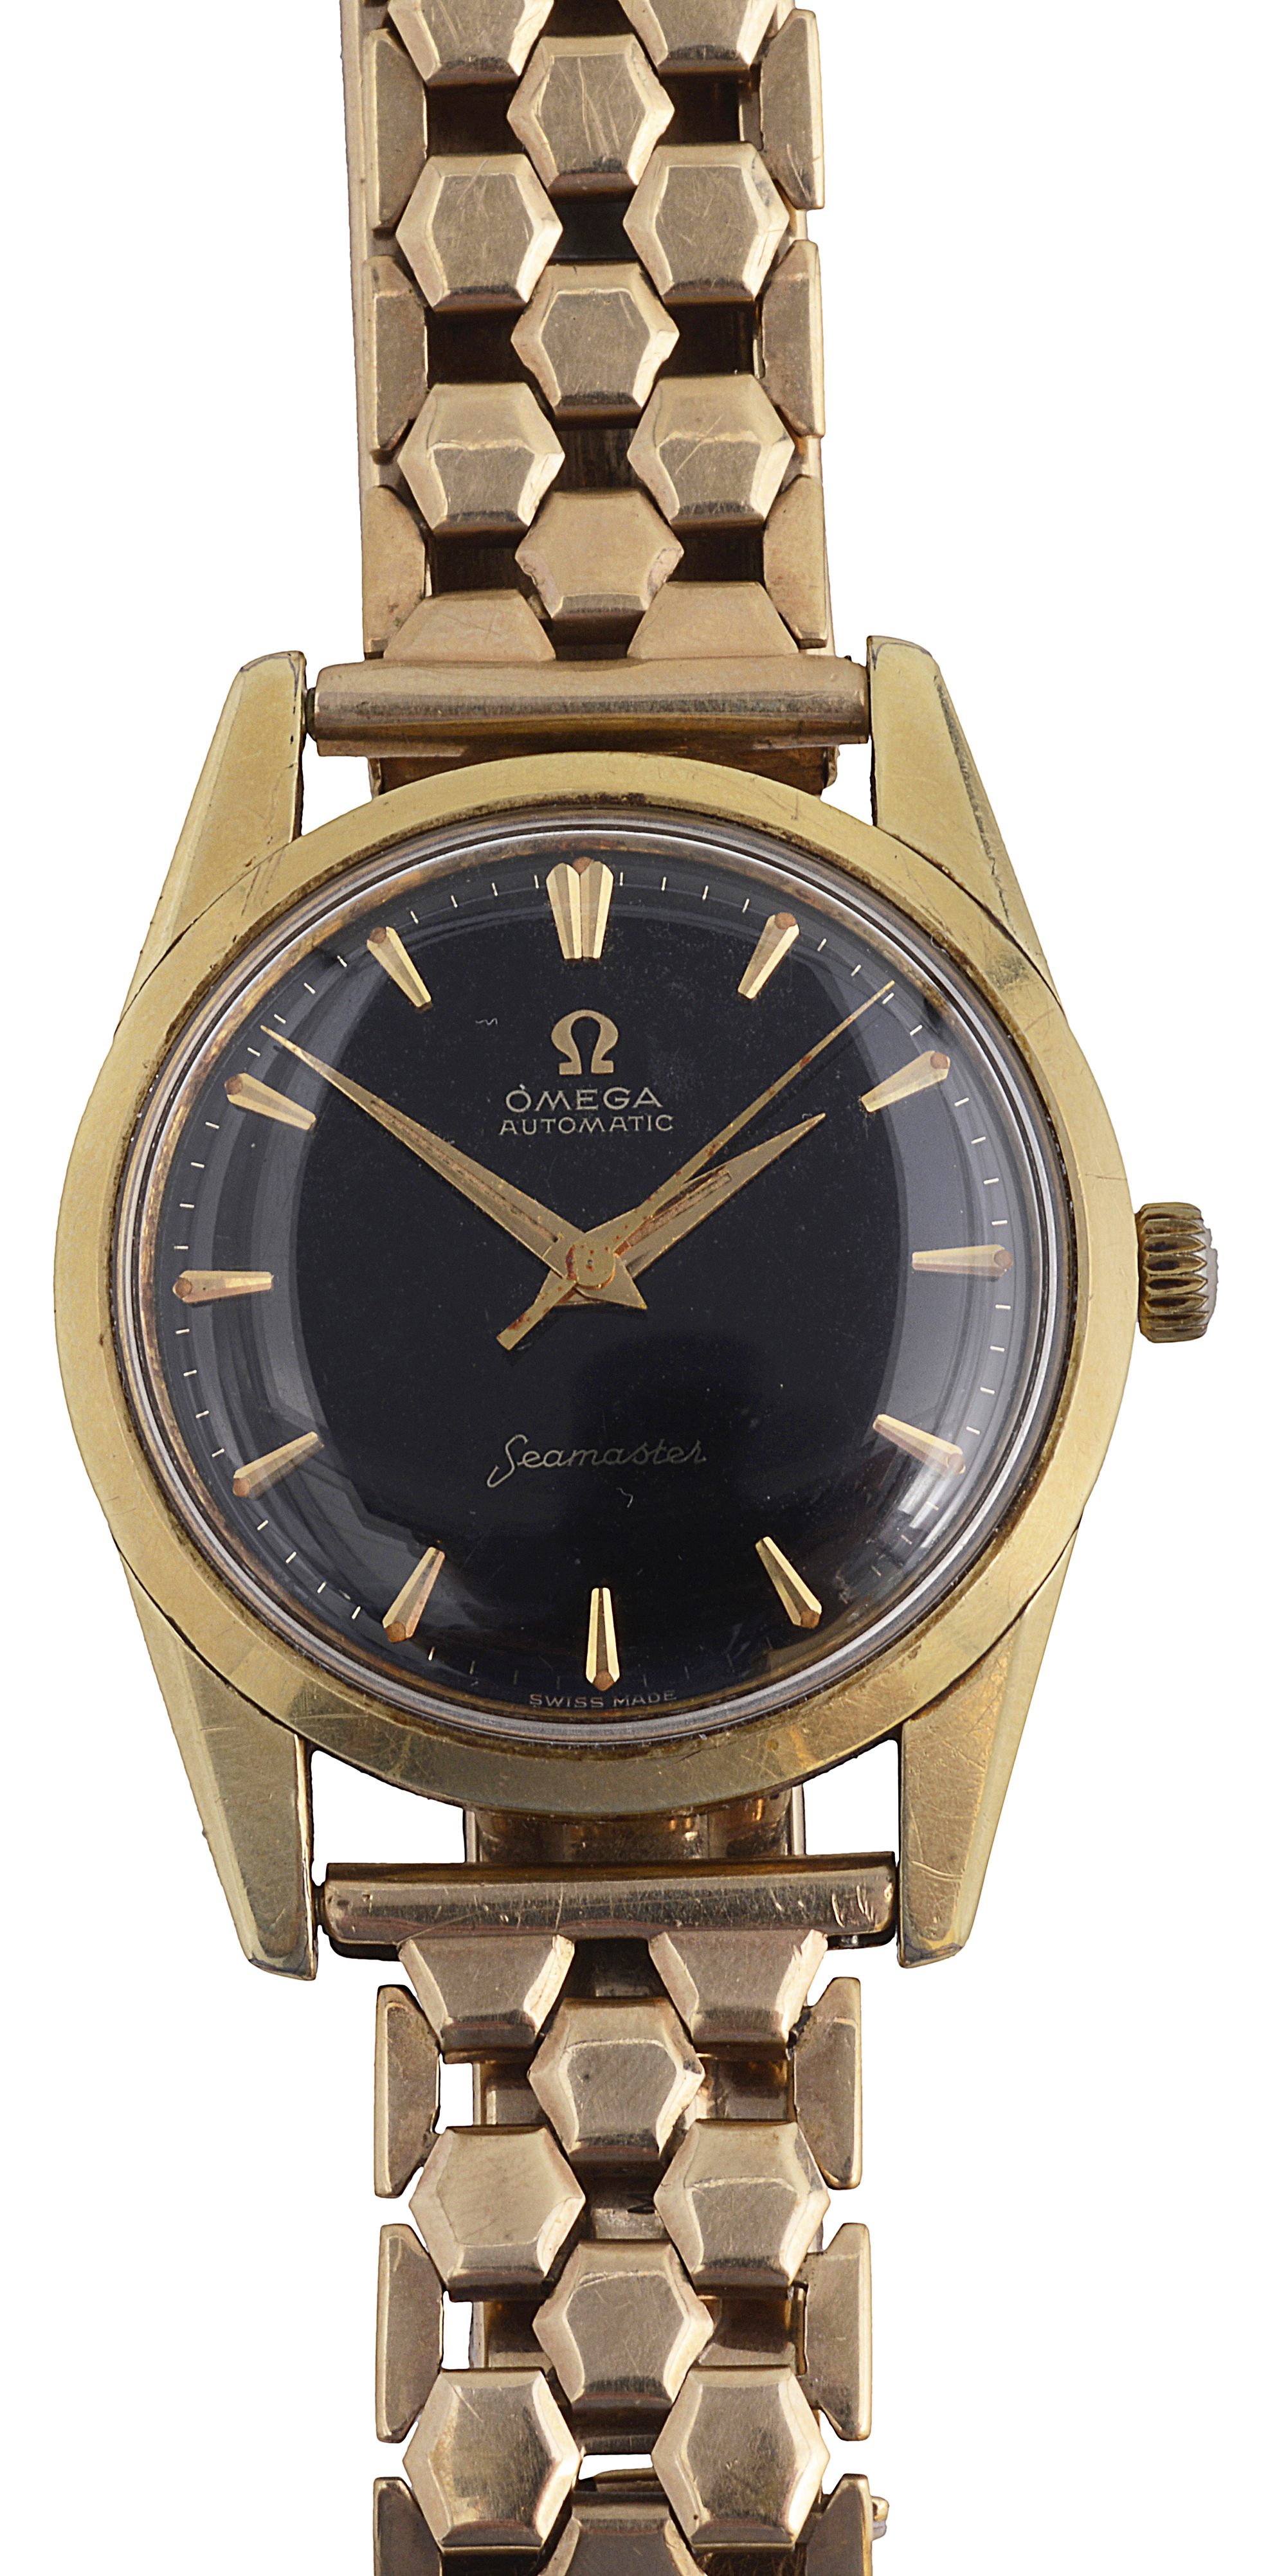 An Automatic Omega Seamaster bracelet wristwatch